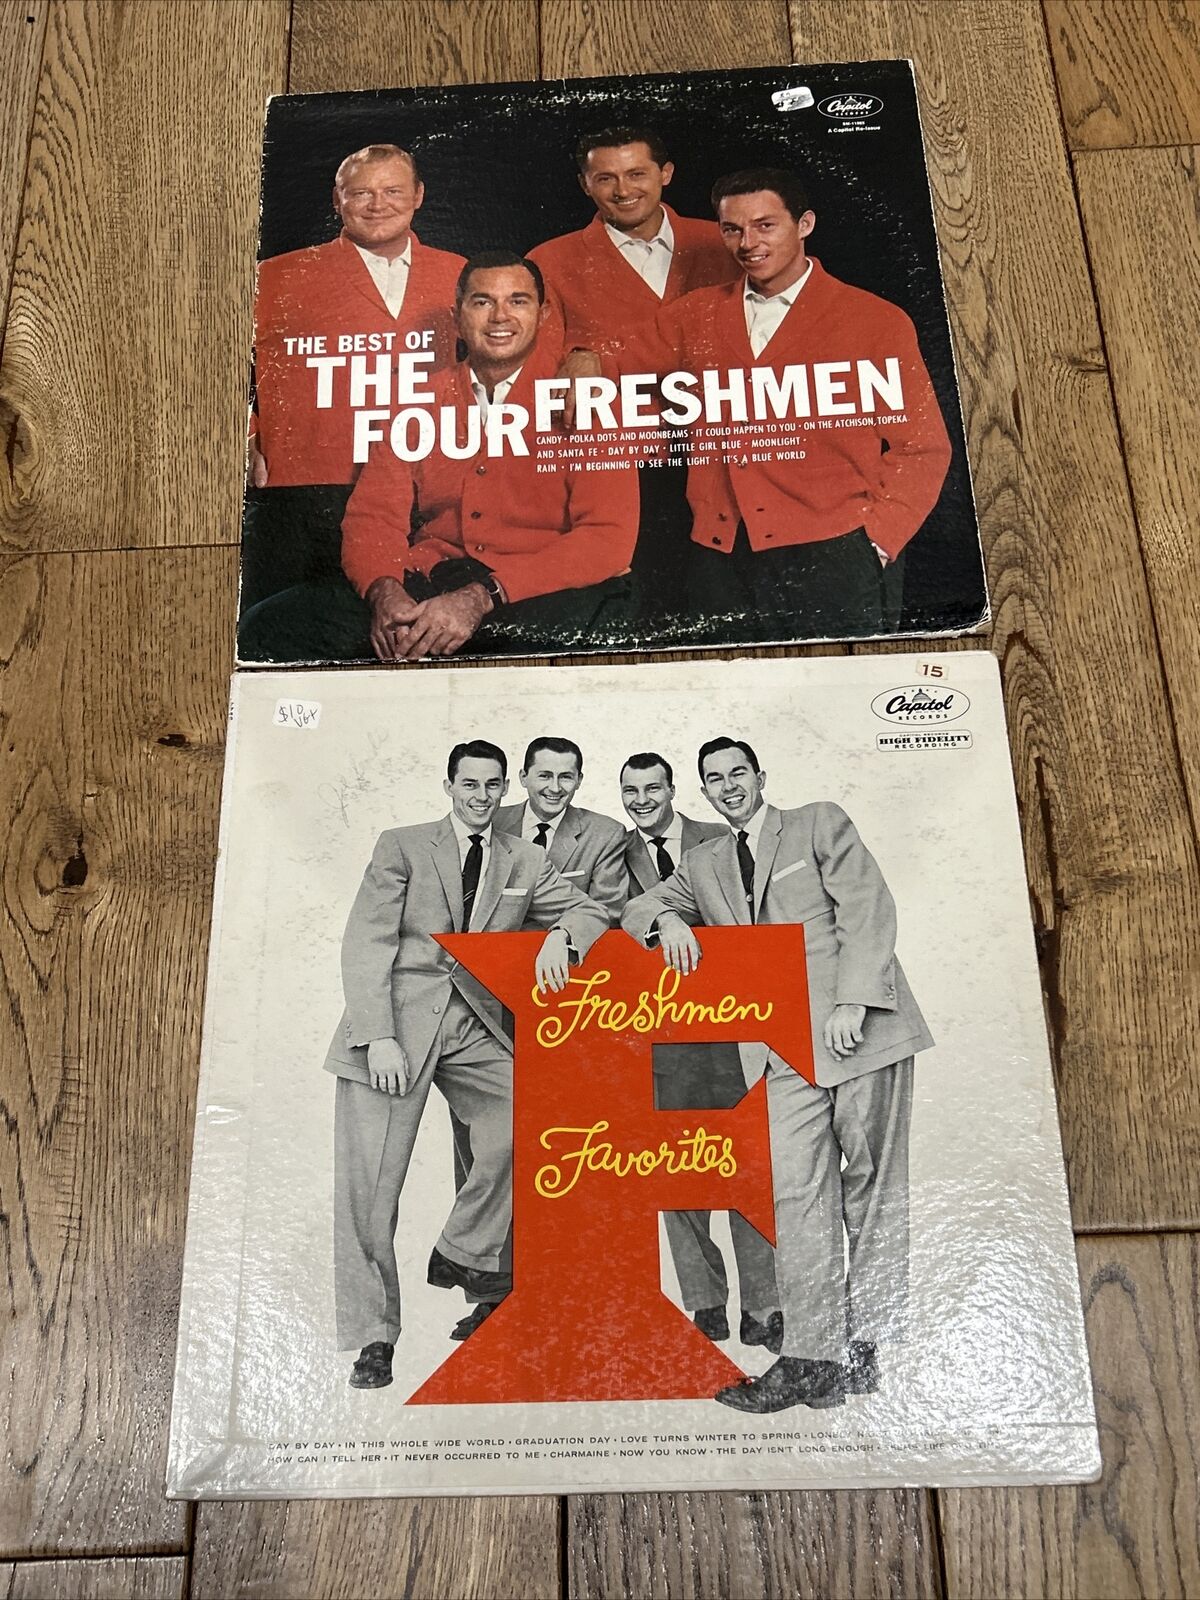 Vintage The Four Freshmen - The Best Of & Favorites Vinyl Record Albums